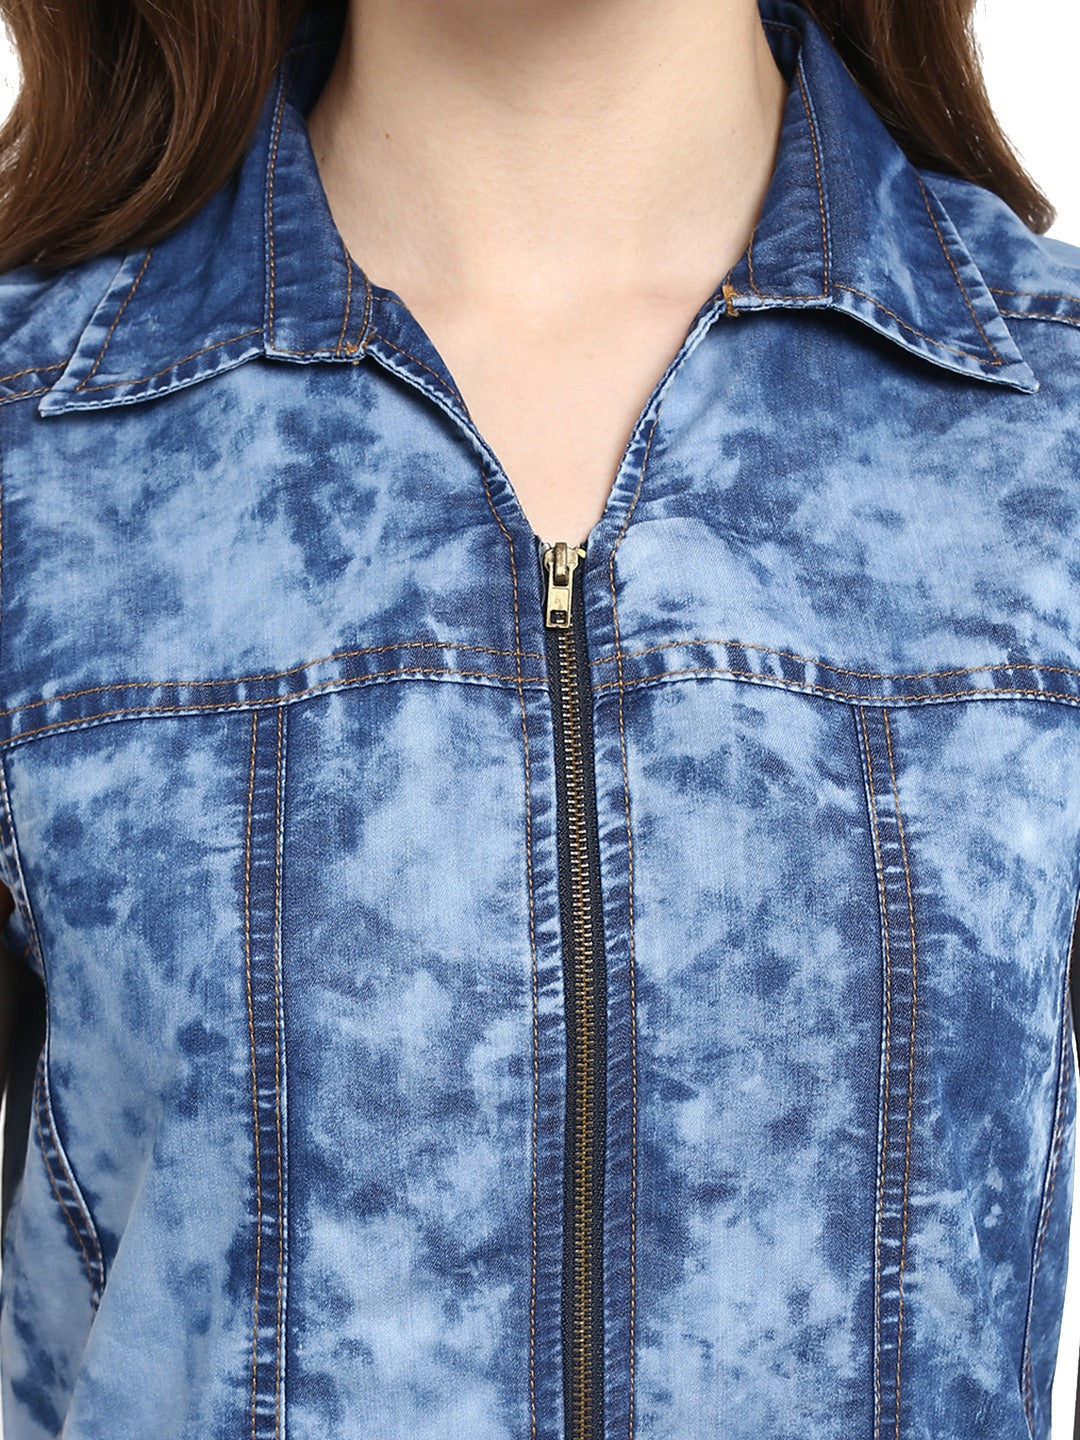 Women's  Cloud Wash Blue Zip Dress with Seam - StyleStone